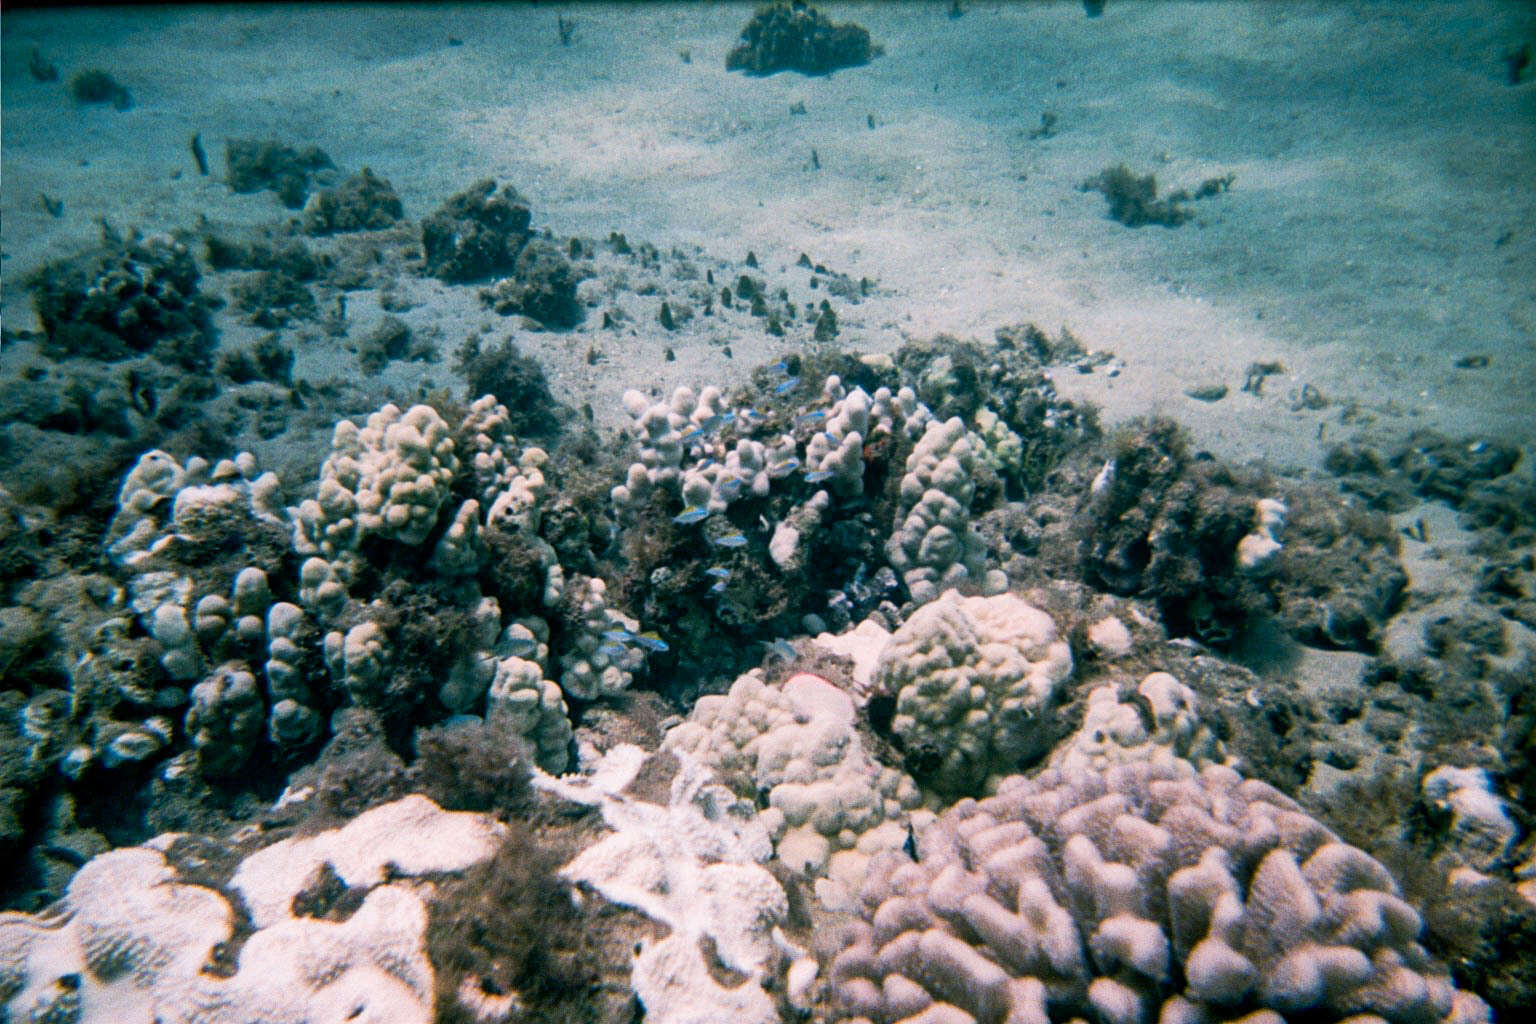 Image of Cauliflower coral